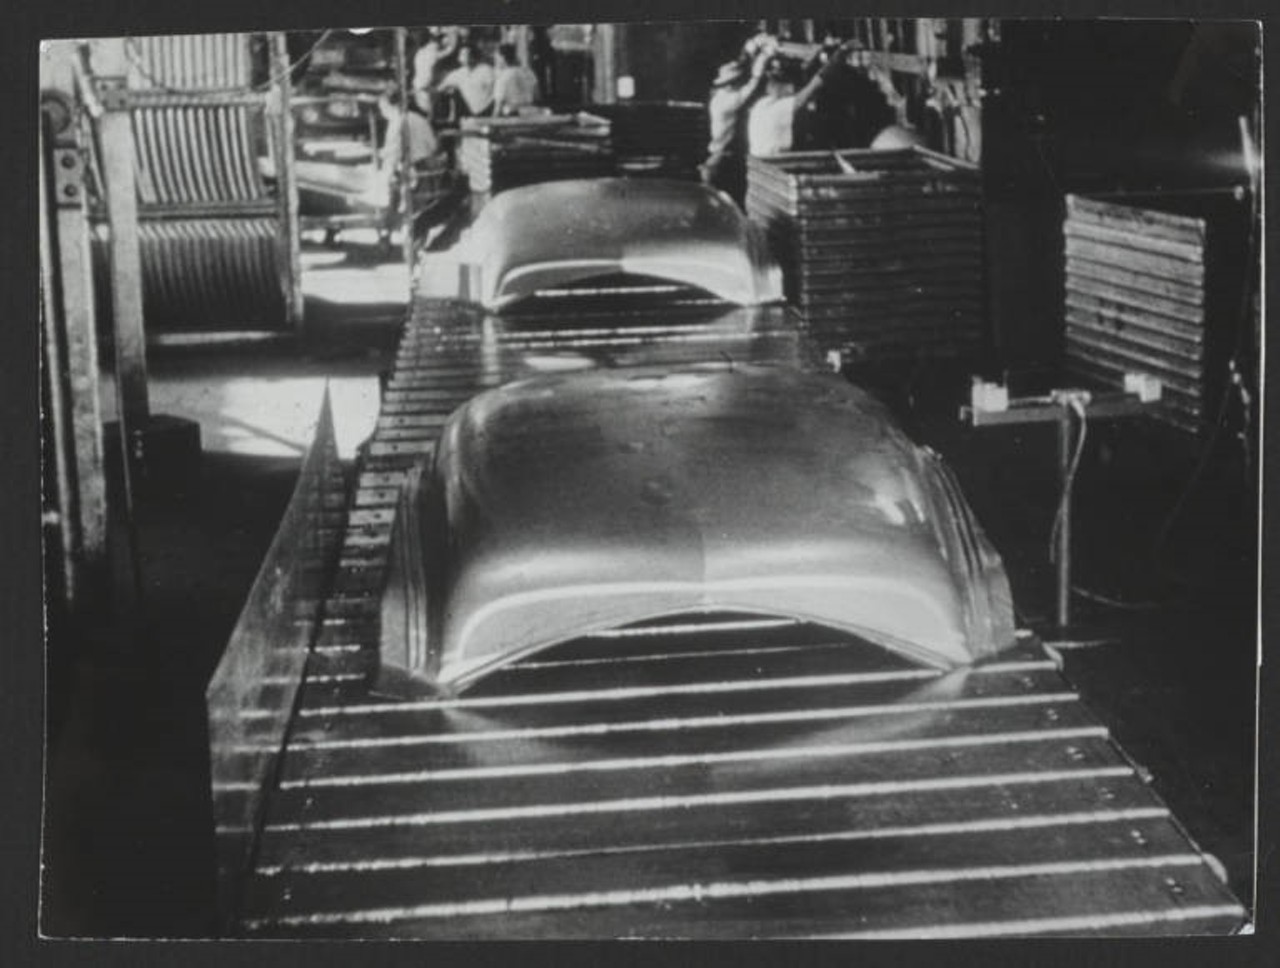 Automotive parts on the assembly line. c. 1935